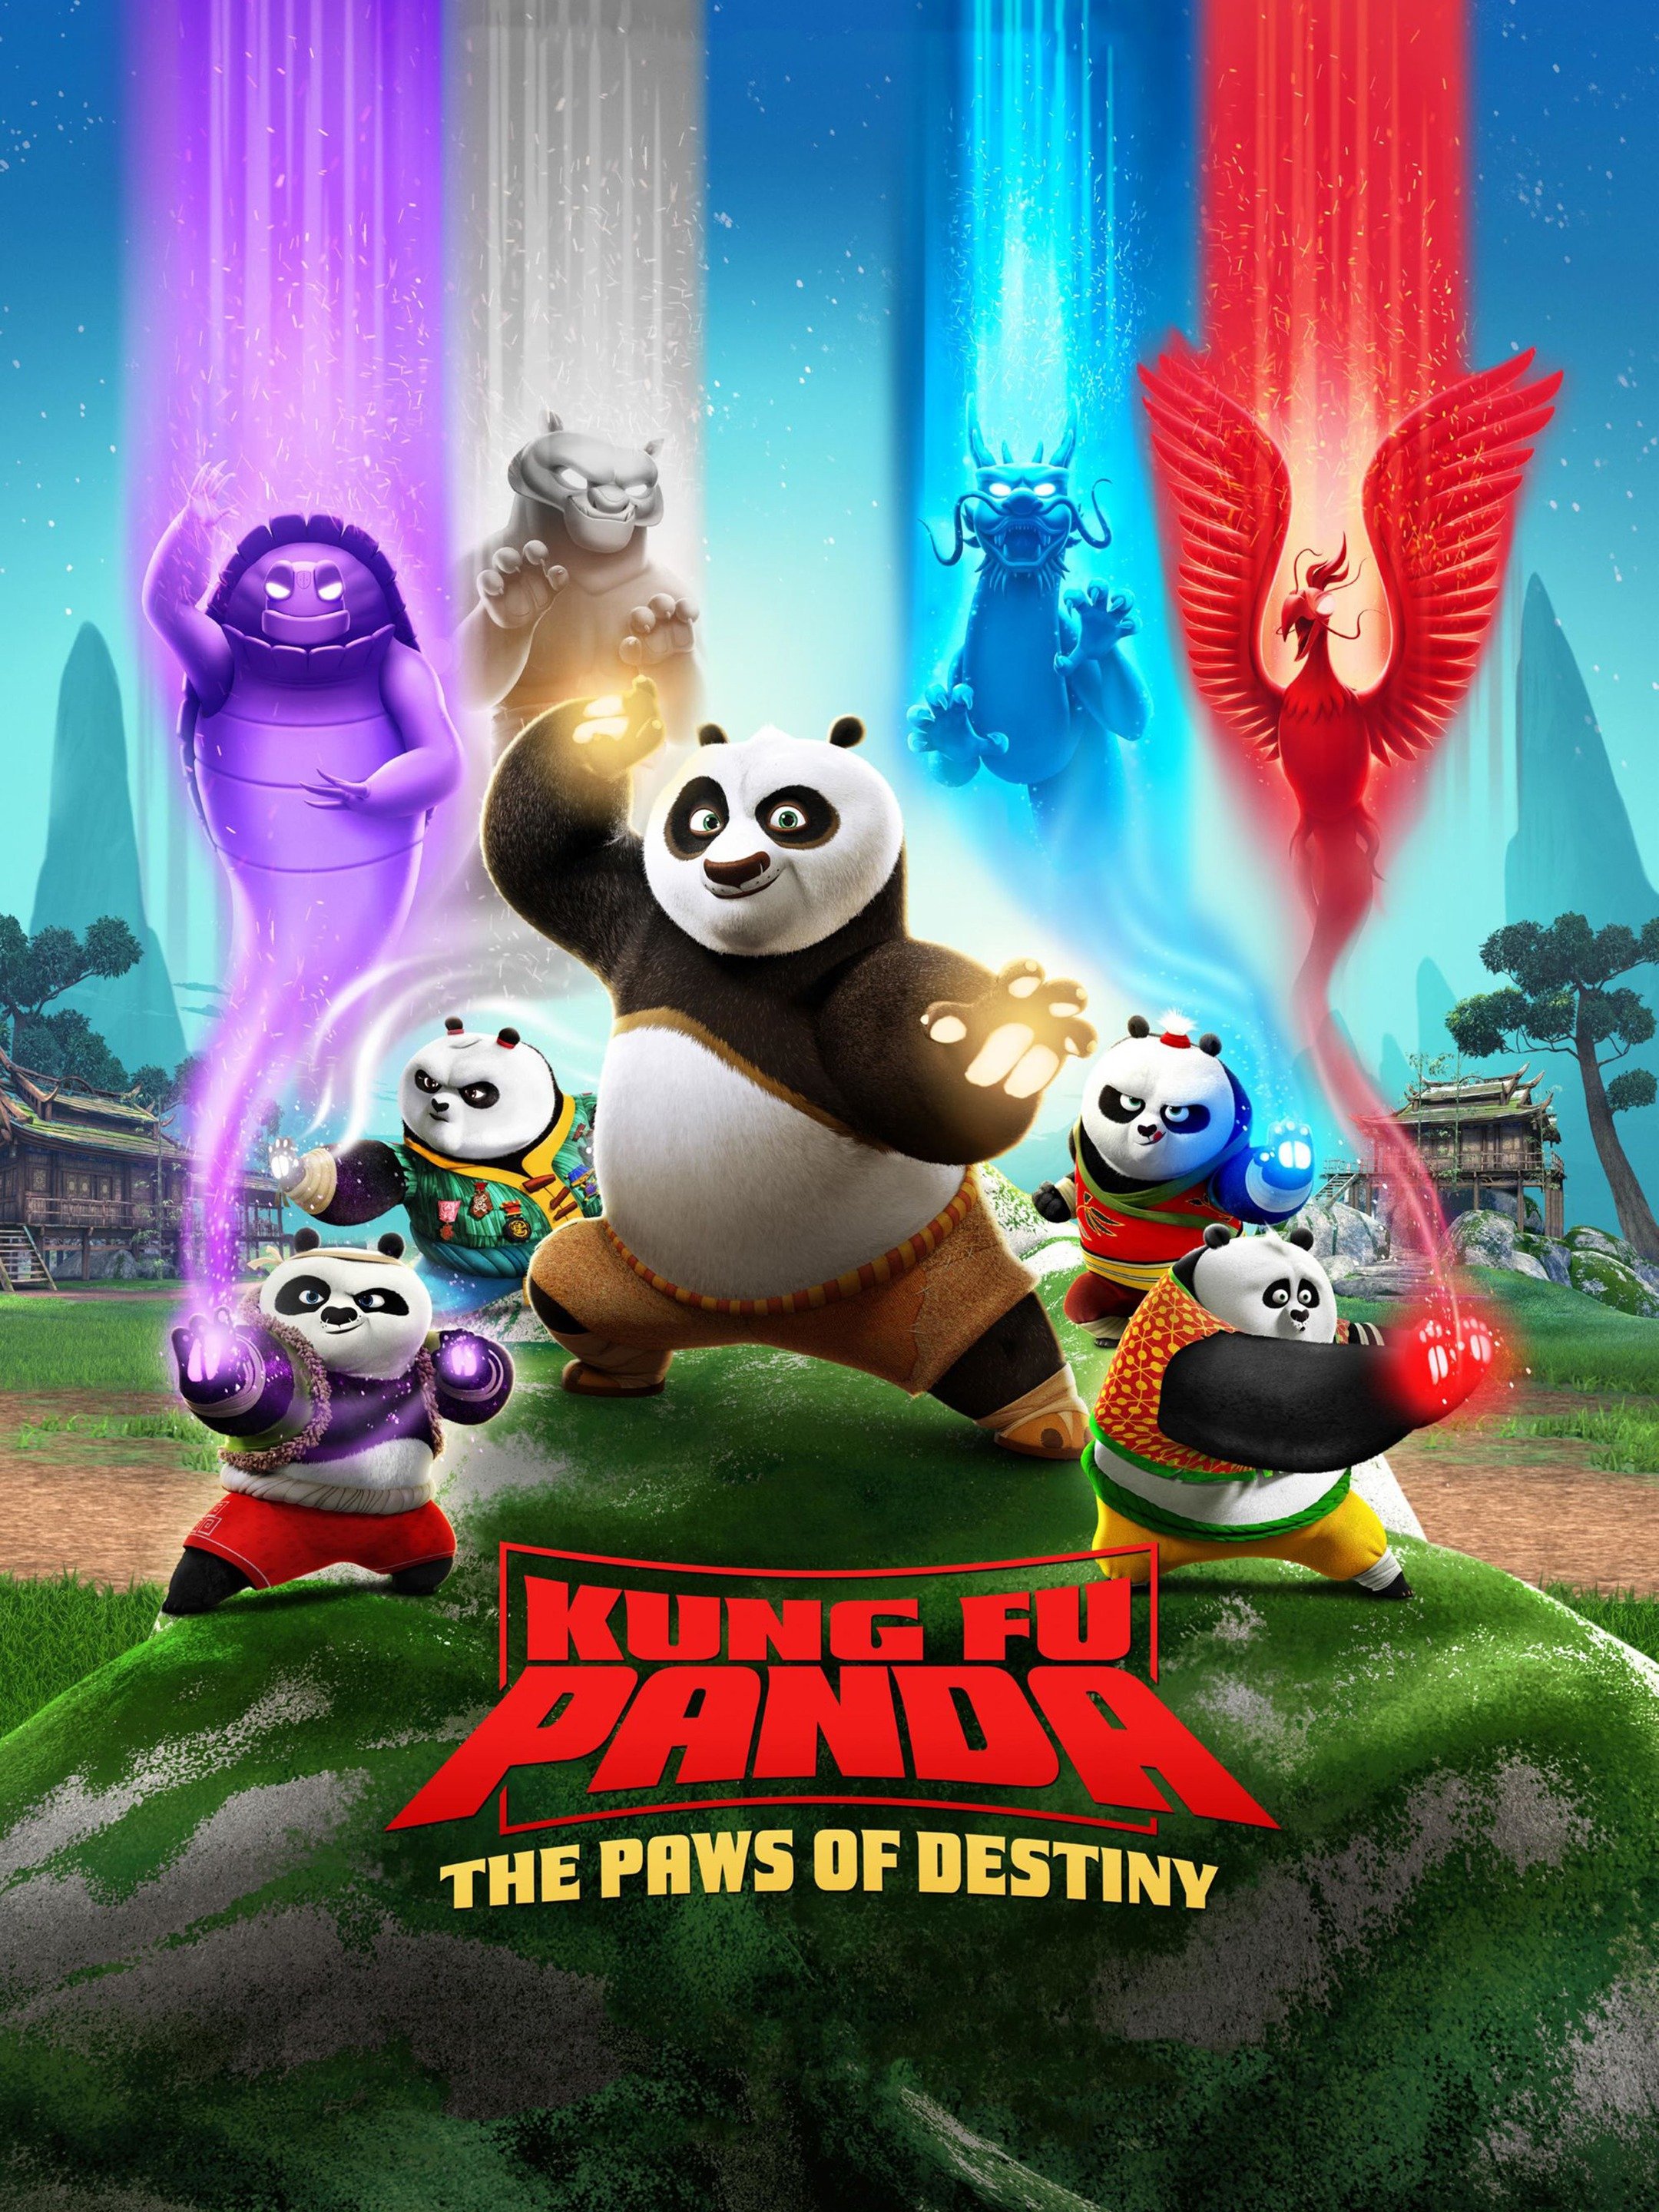 movie review of kung fu panda